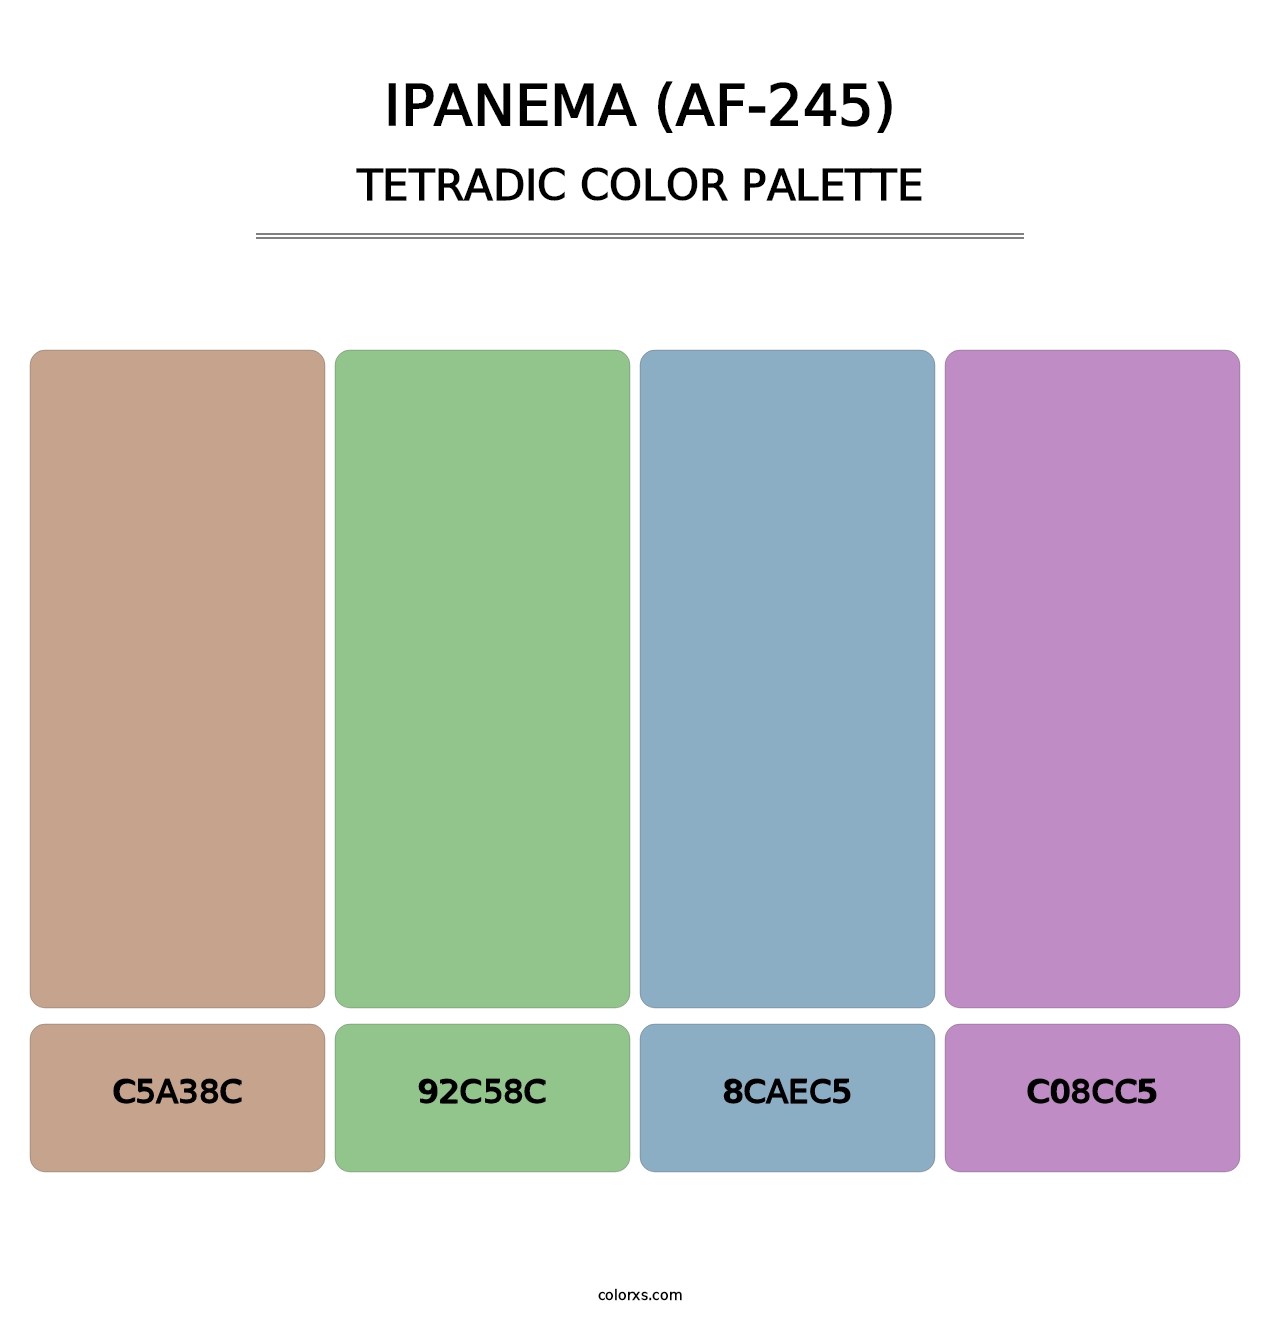 Ipanema (AF-245) - Tetradic Color Palette